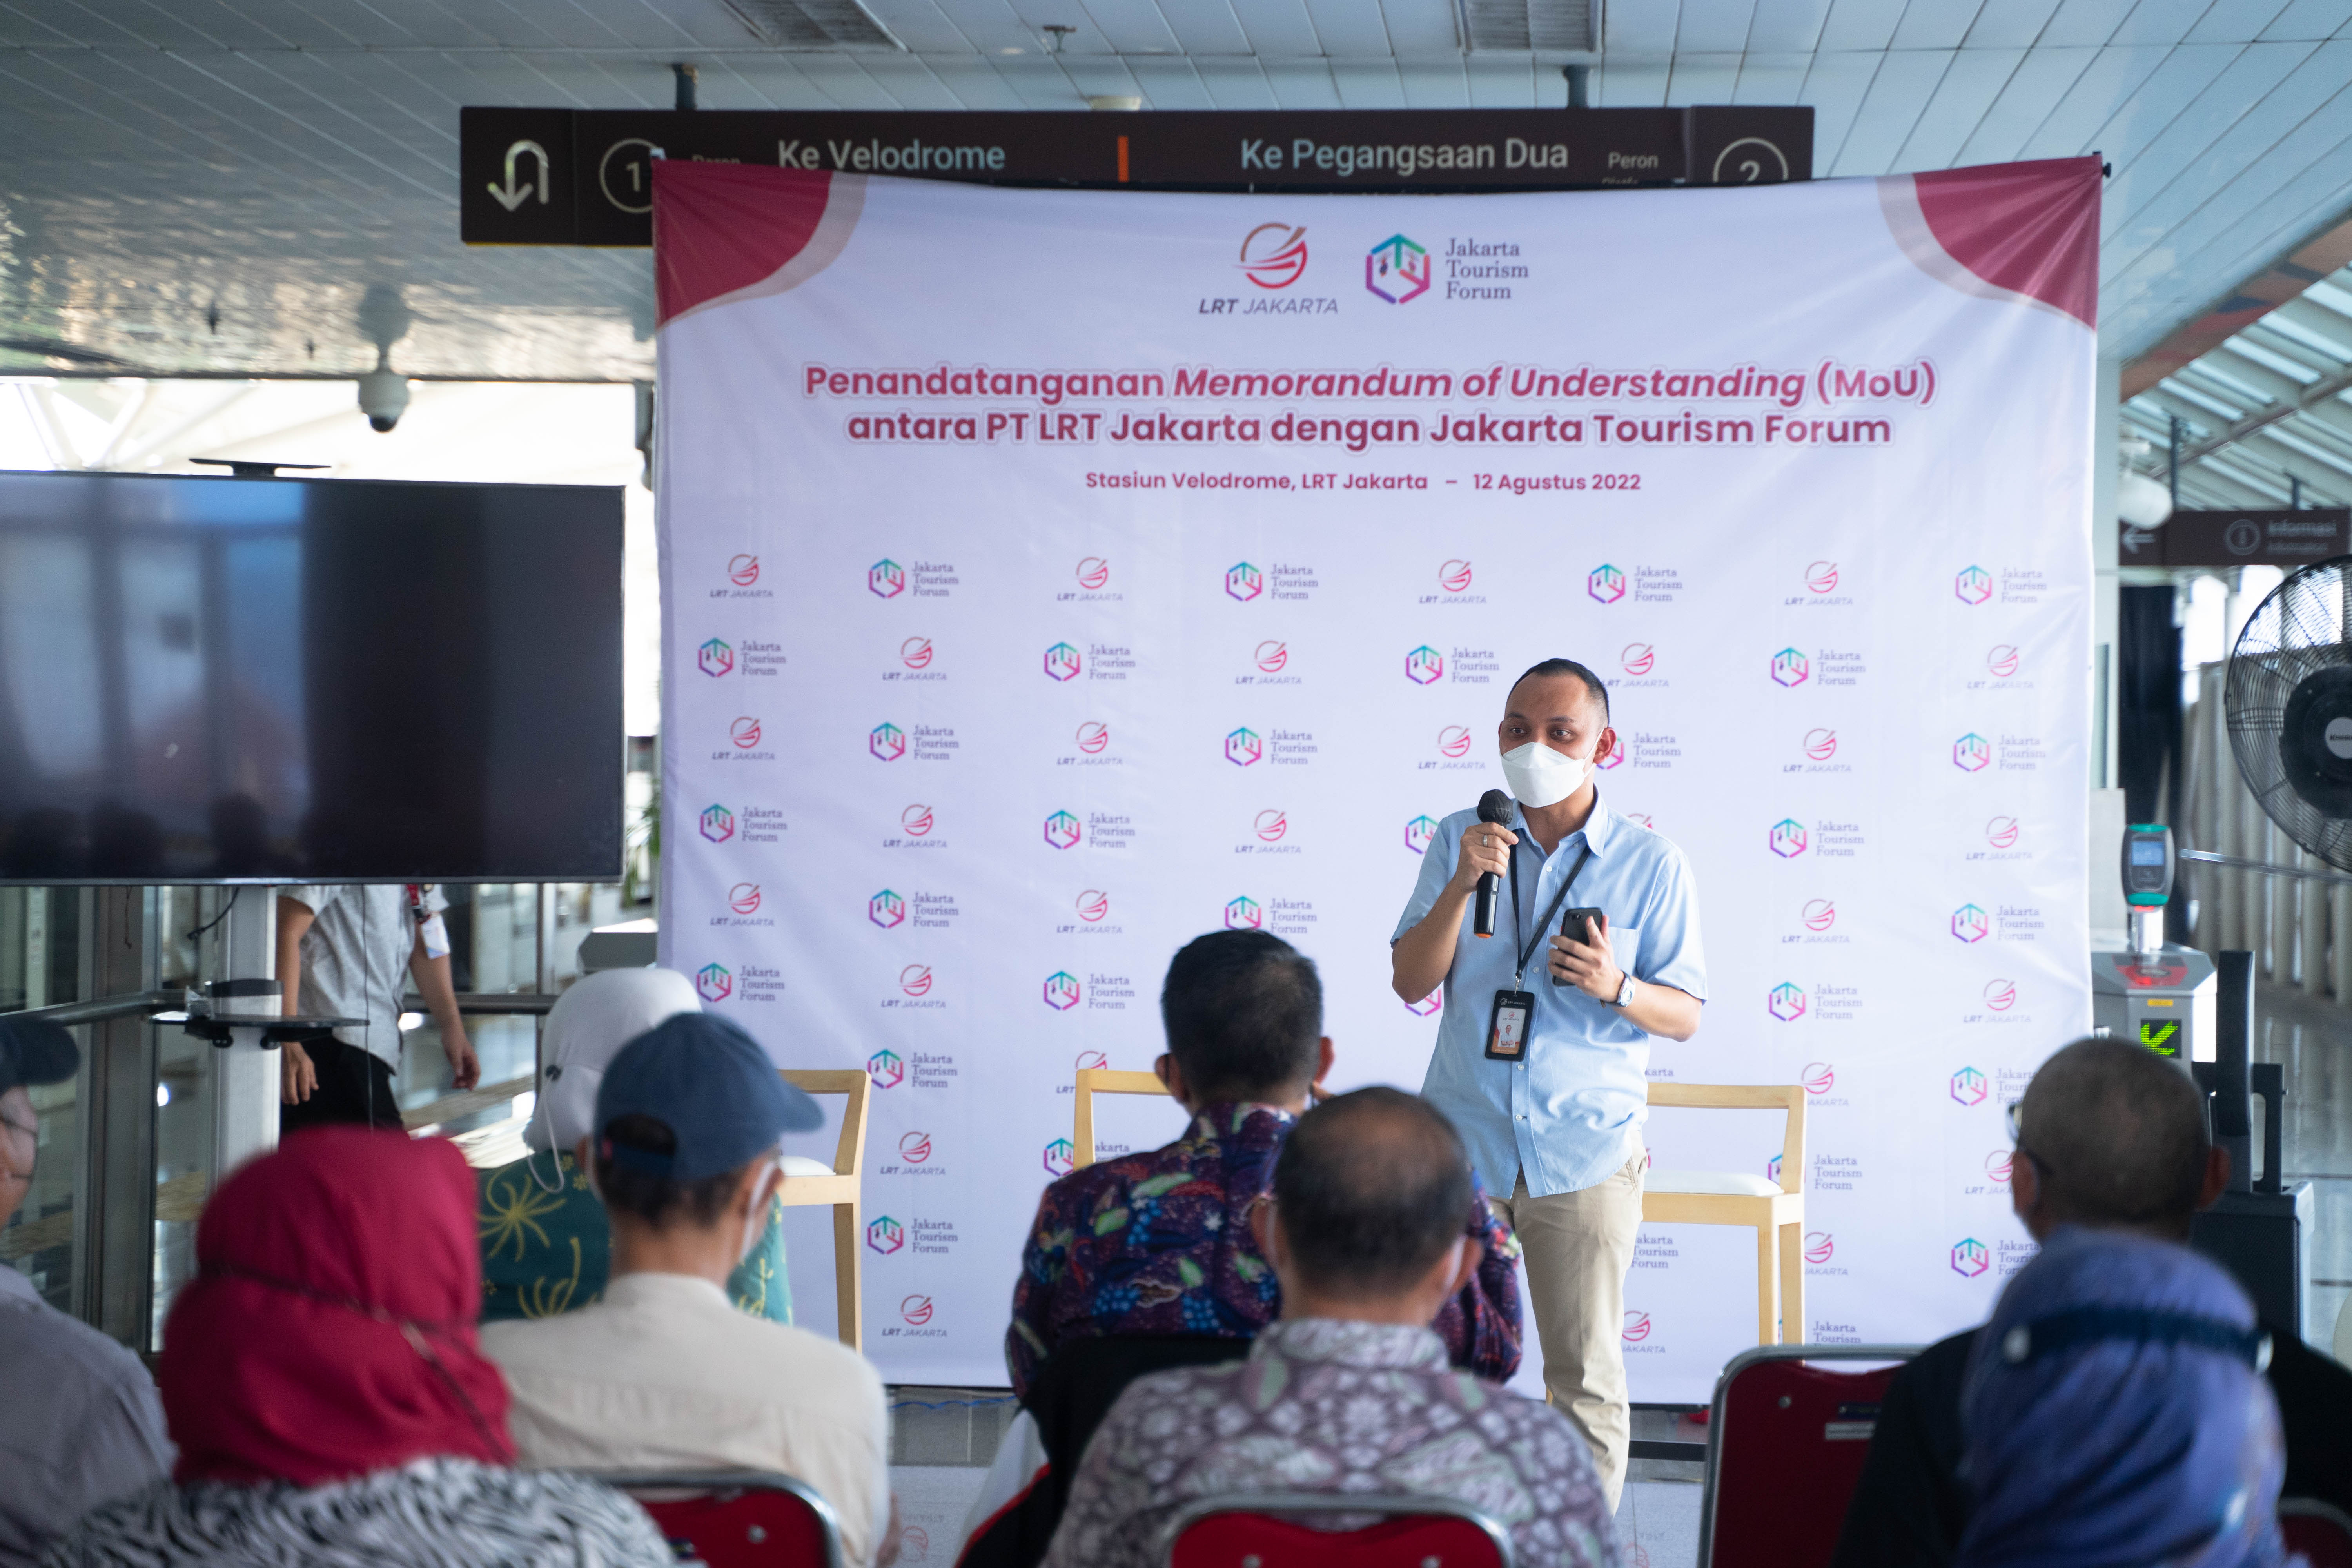 MoU LRTJ dengan JTF (Jakarta Tourism Forum) 2022